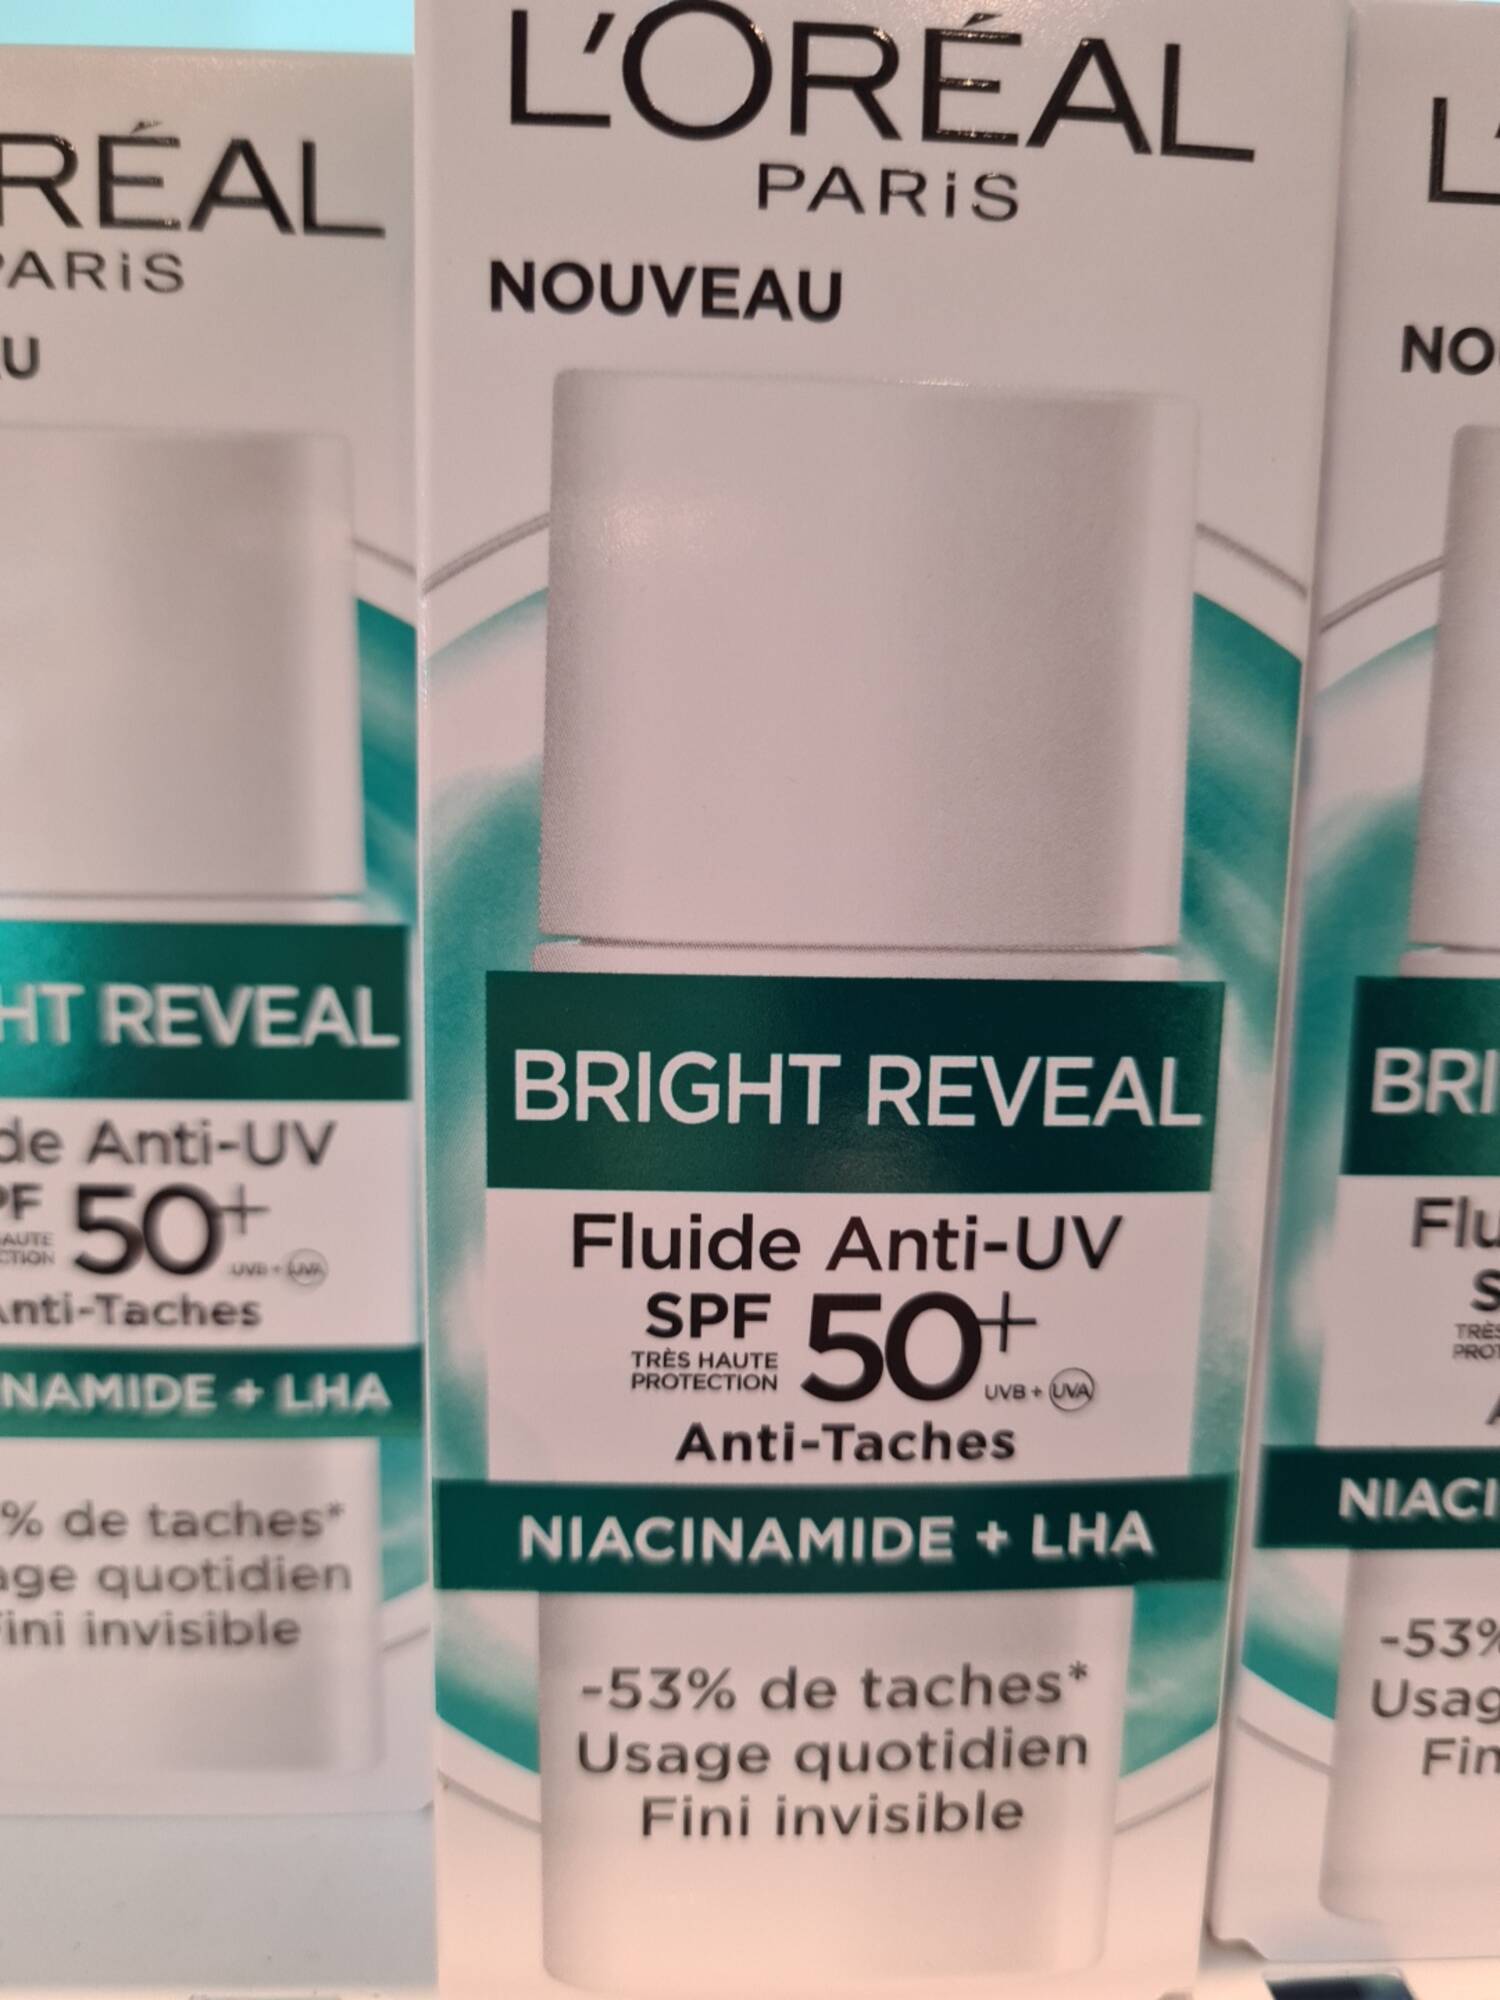 L'ORÉAL - Bright reveal - Fluide anti-uv spf 50+ anti-tache